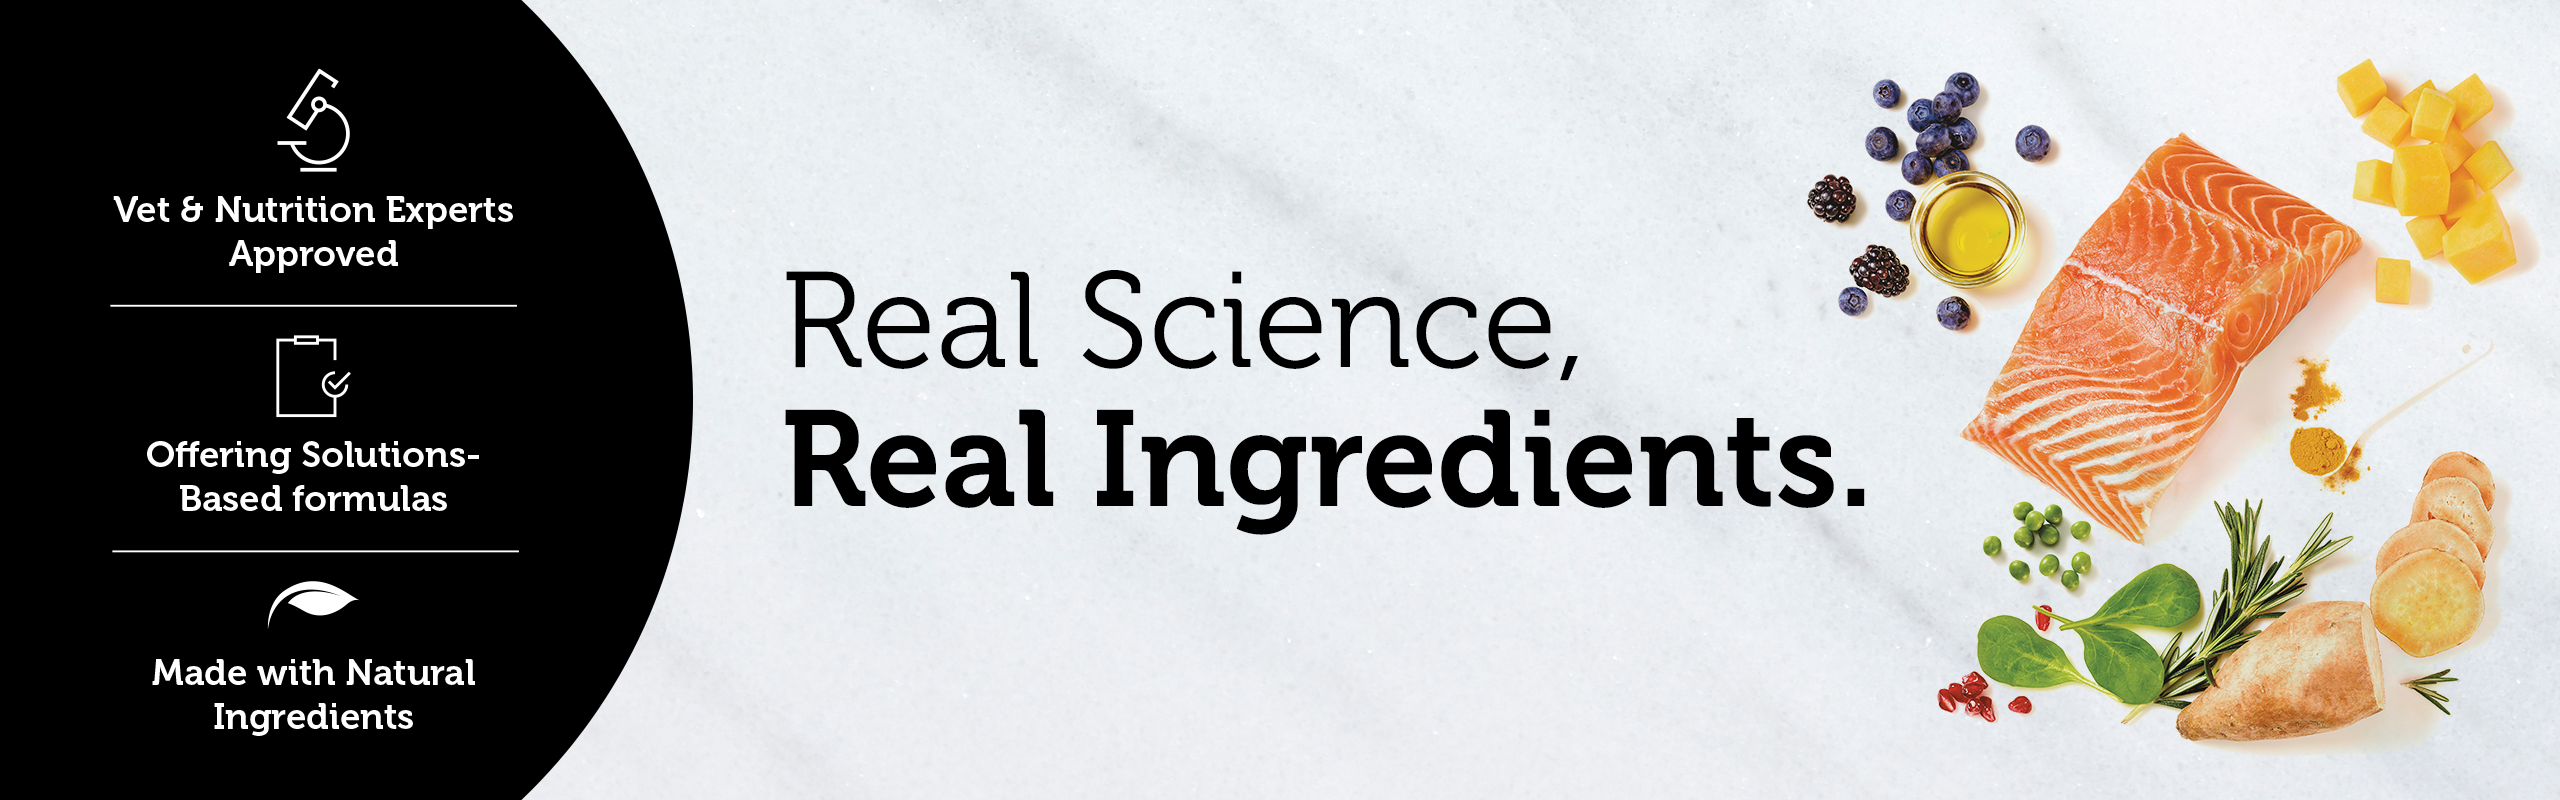 Real Science Real ingredients